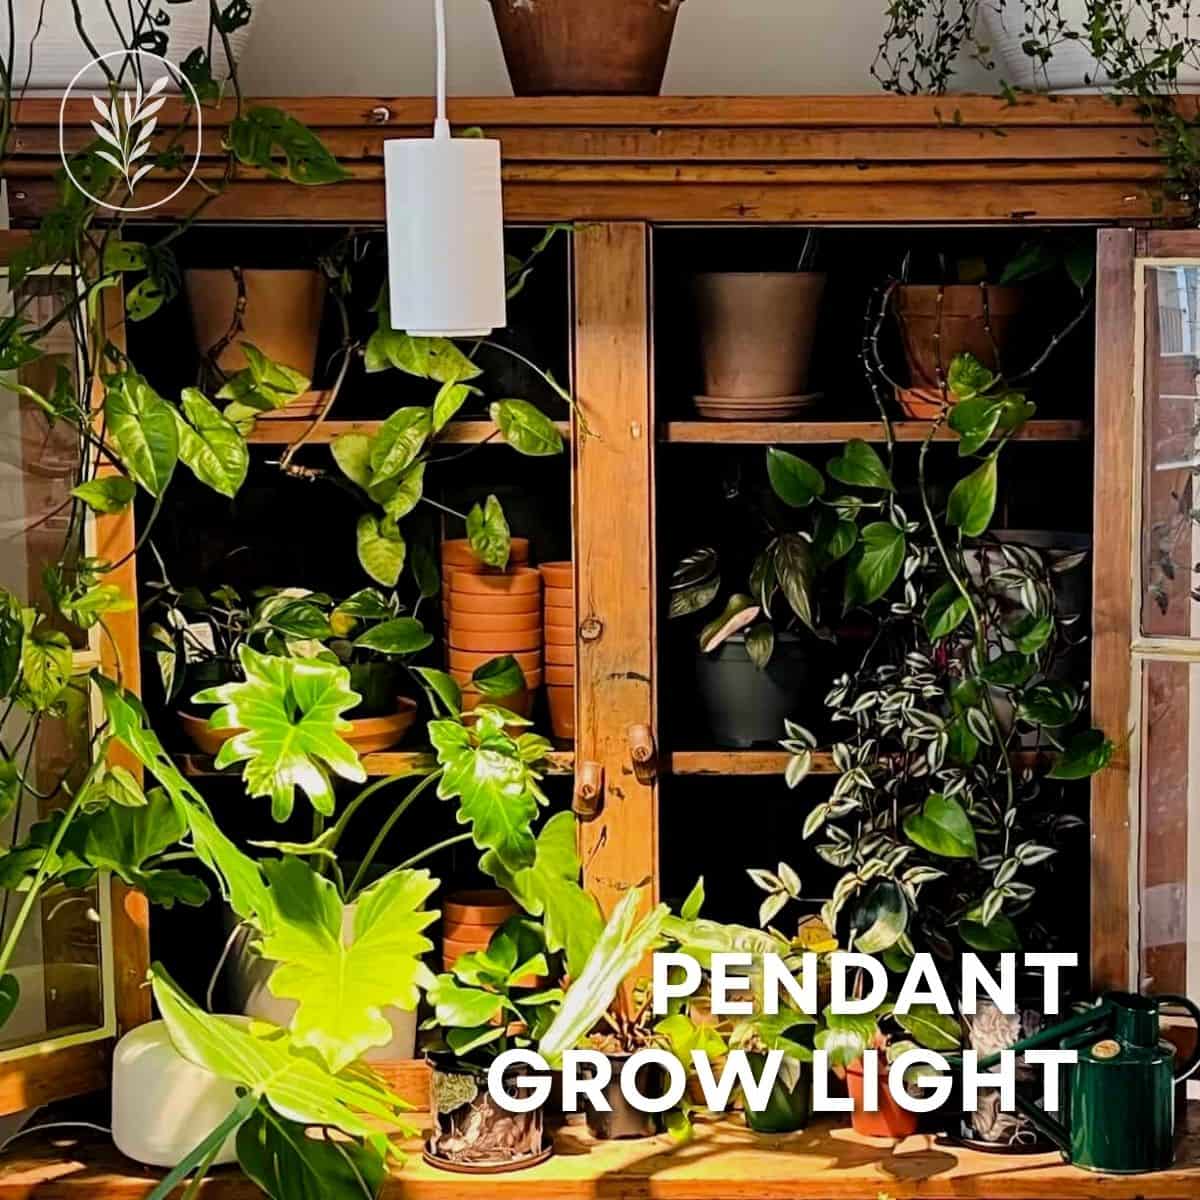 Pendant grow light via @home4theharvest